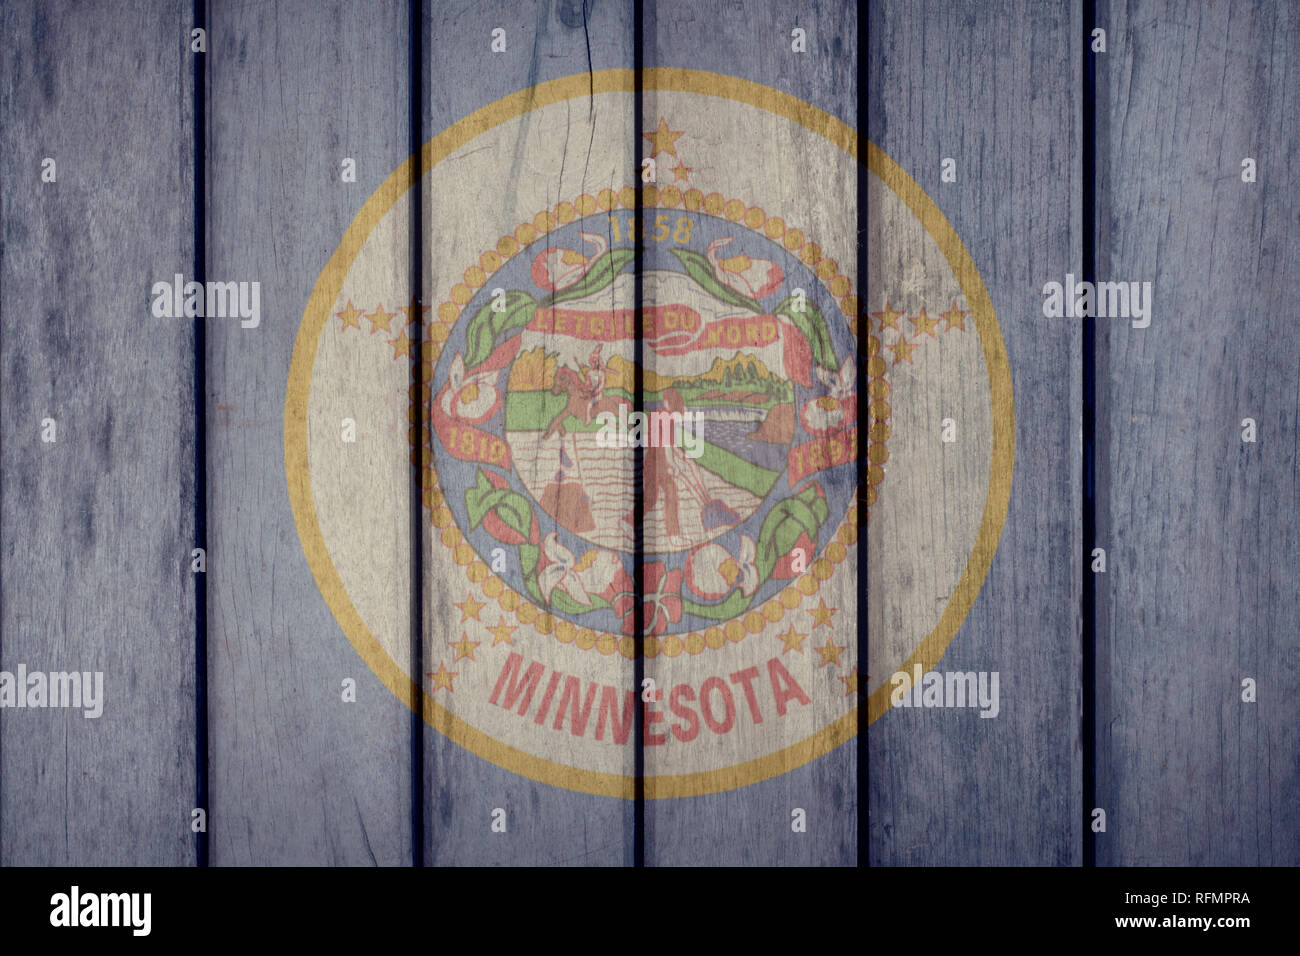 USA Politics News Concept: US State Minnesota Flag Wooden Fence Stock Photo